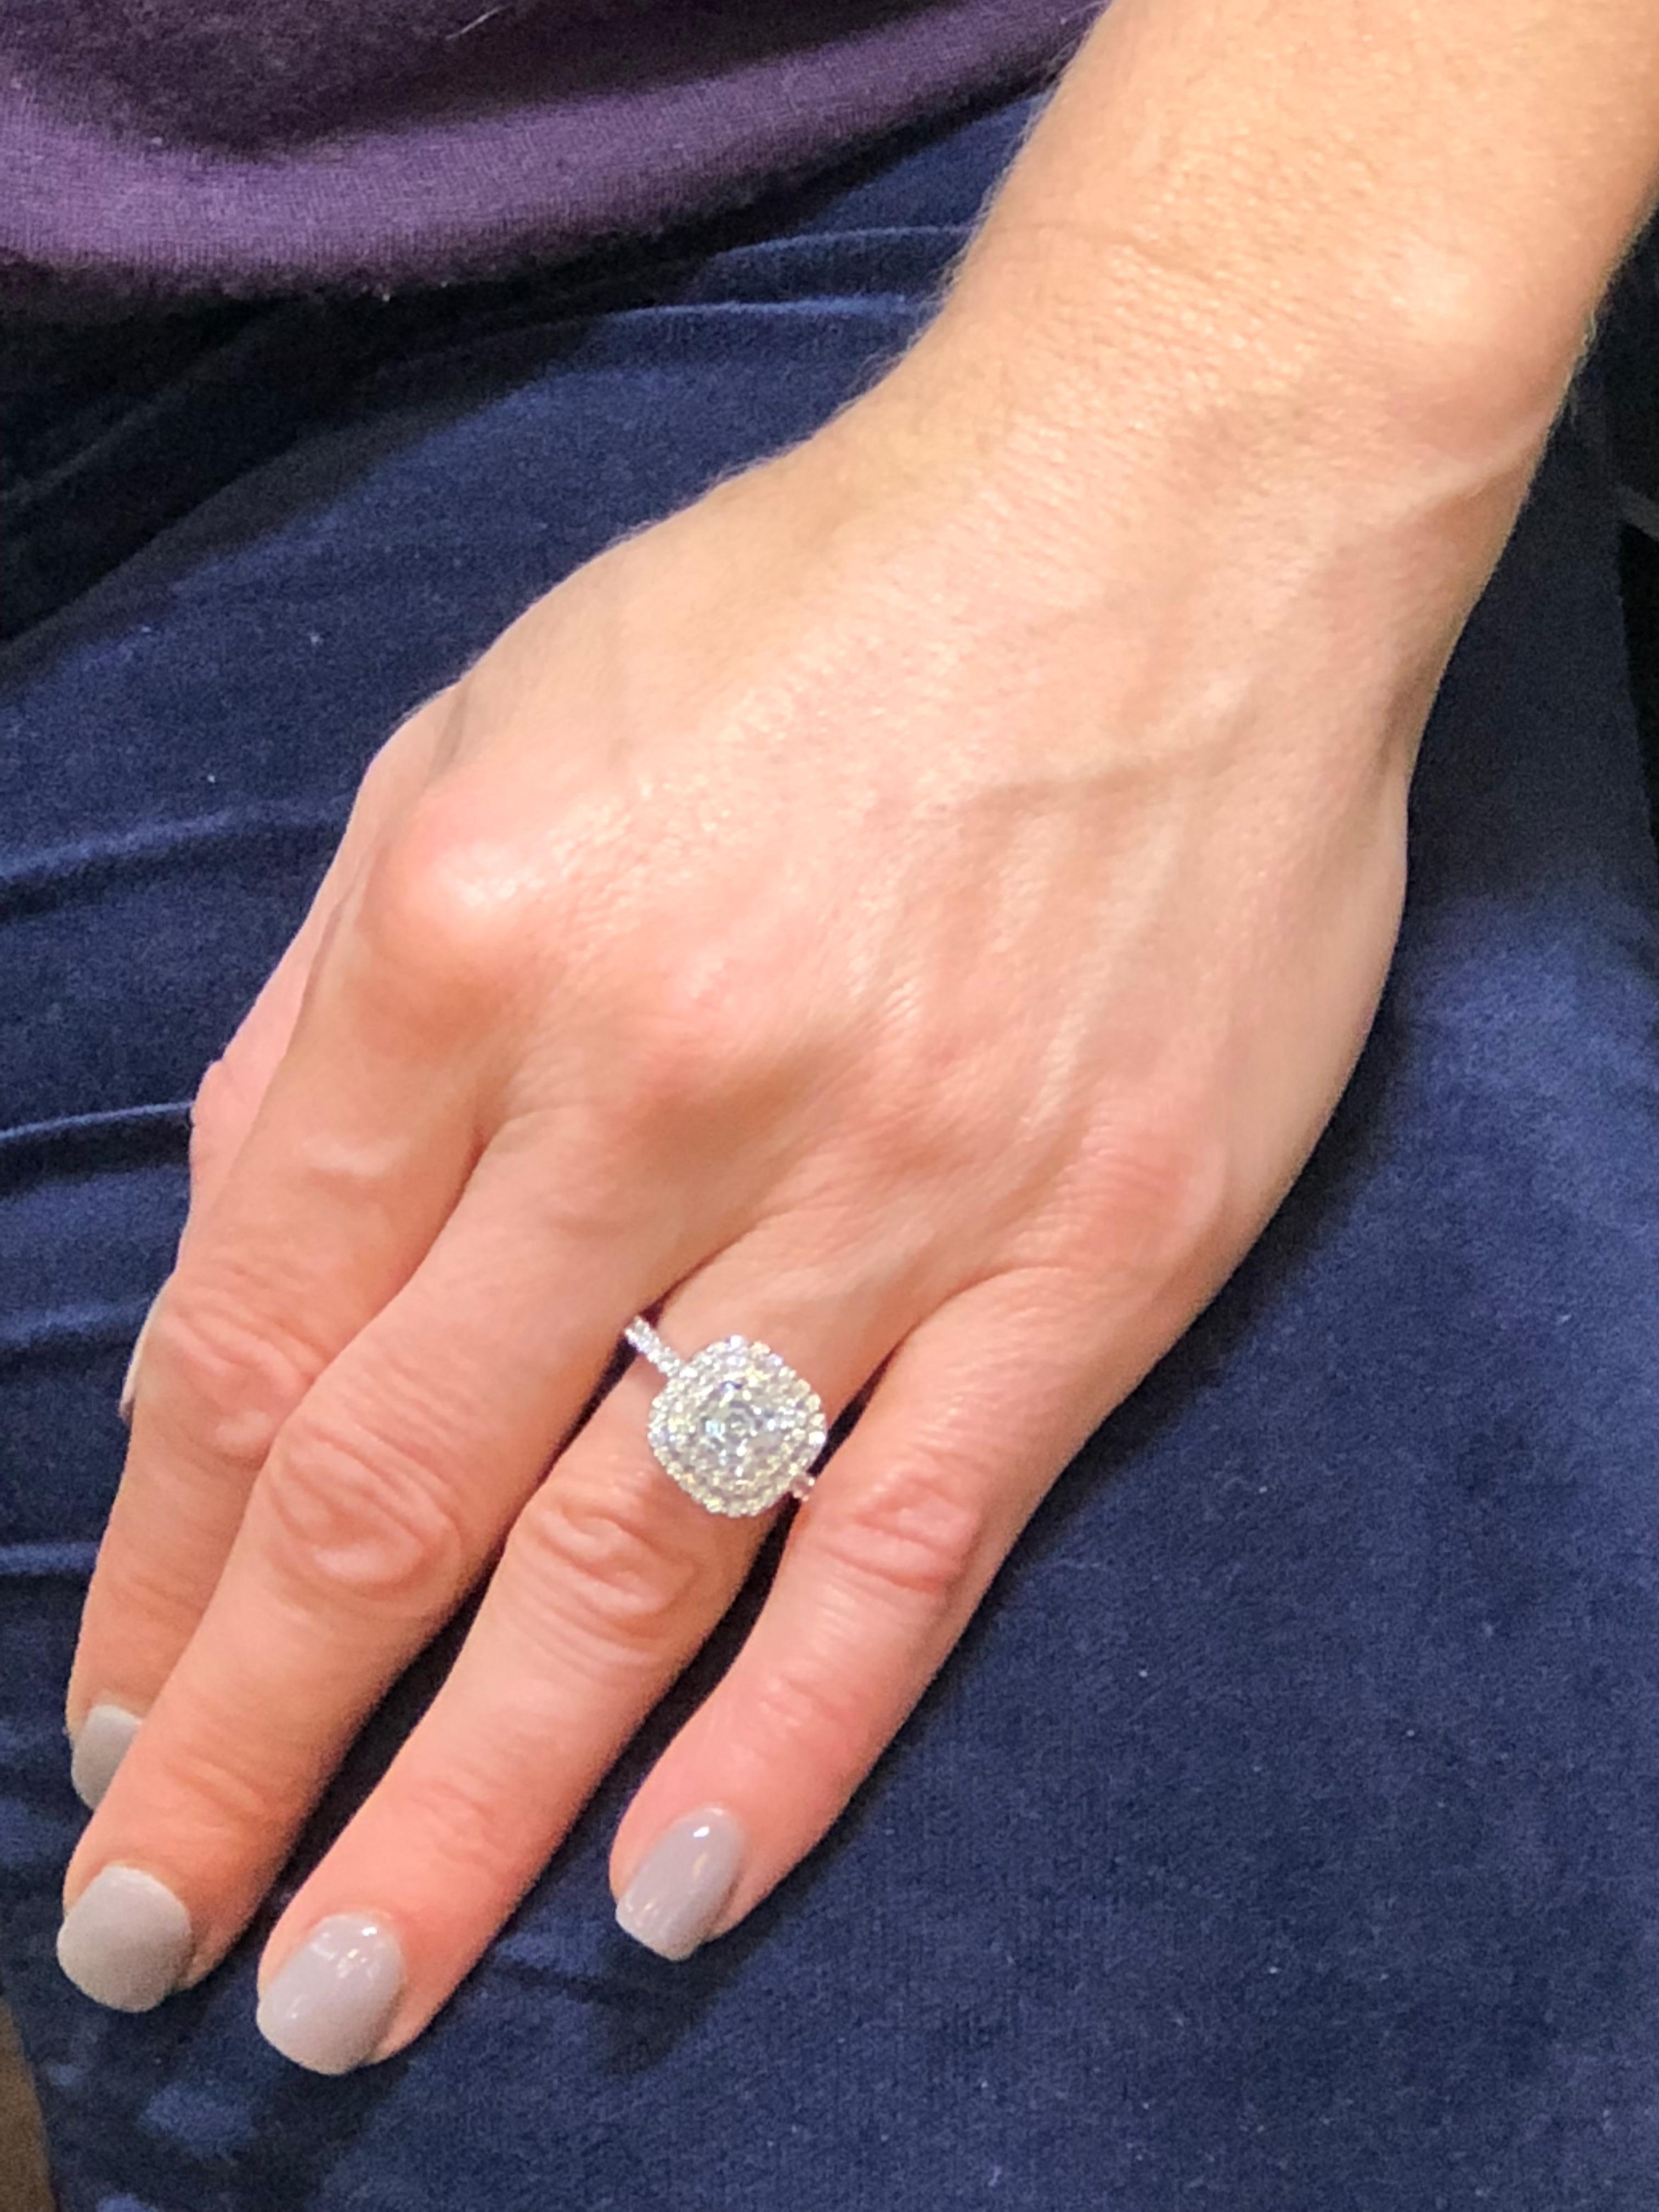 1.5 carat emerald cut diamond ring